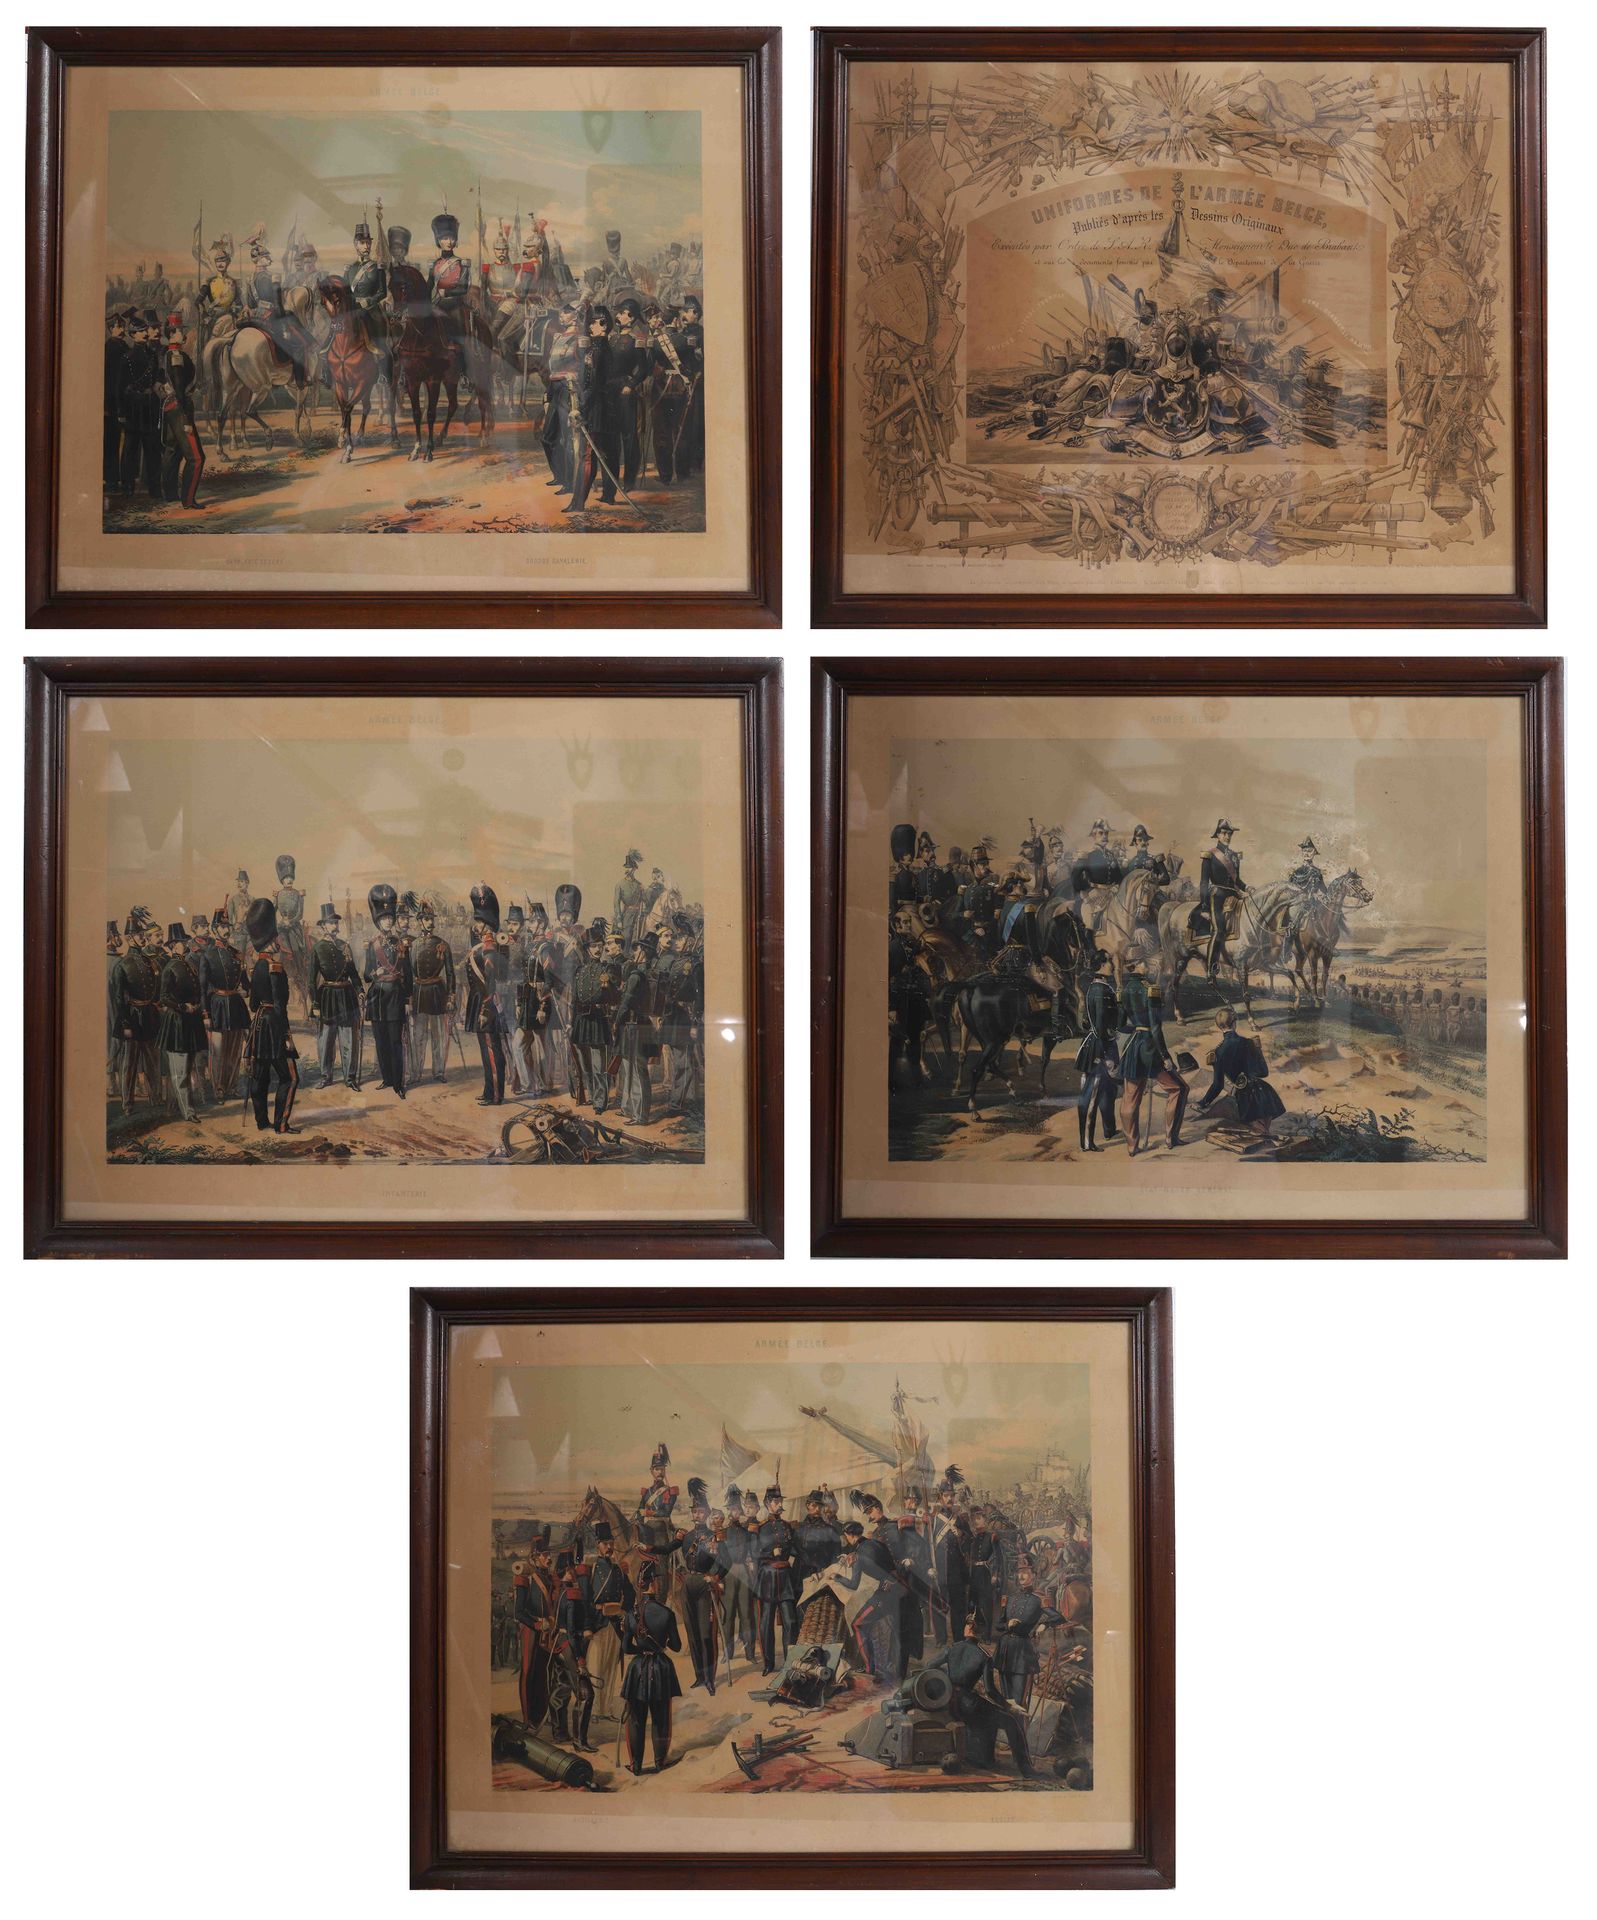 Null 亨德里克斯（1817-1899）

一套5幅石版画，比利时军队，约1880年

玻璃下的框架

尺寸：85x68厘米